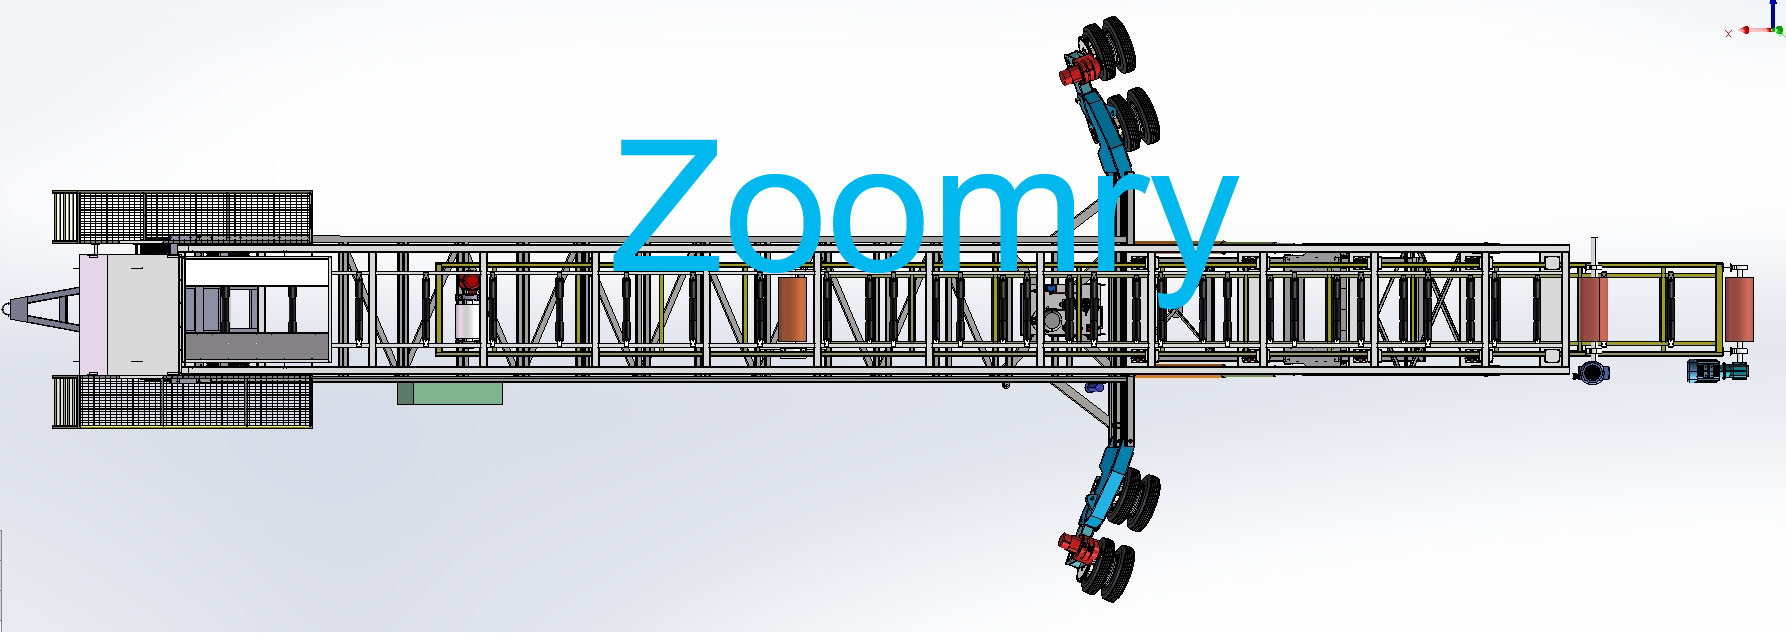 Wheel Radial Stacker, stacker conveyor, mobile stacker